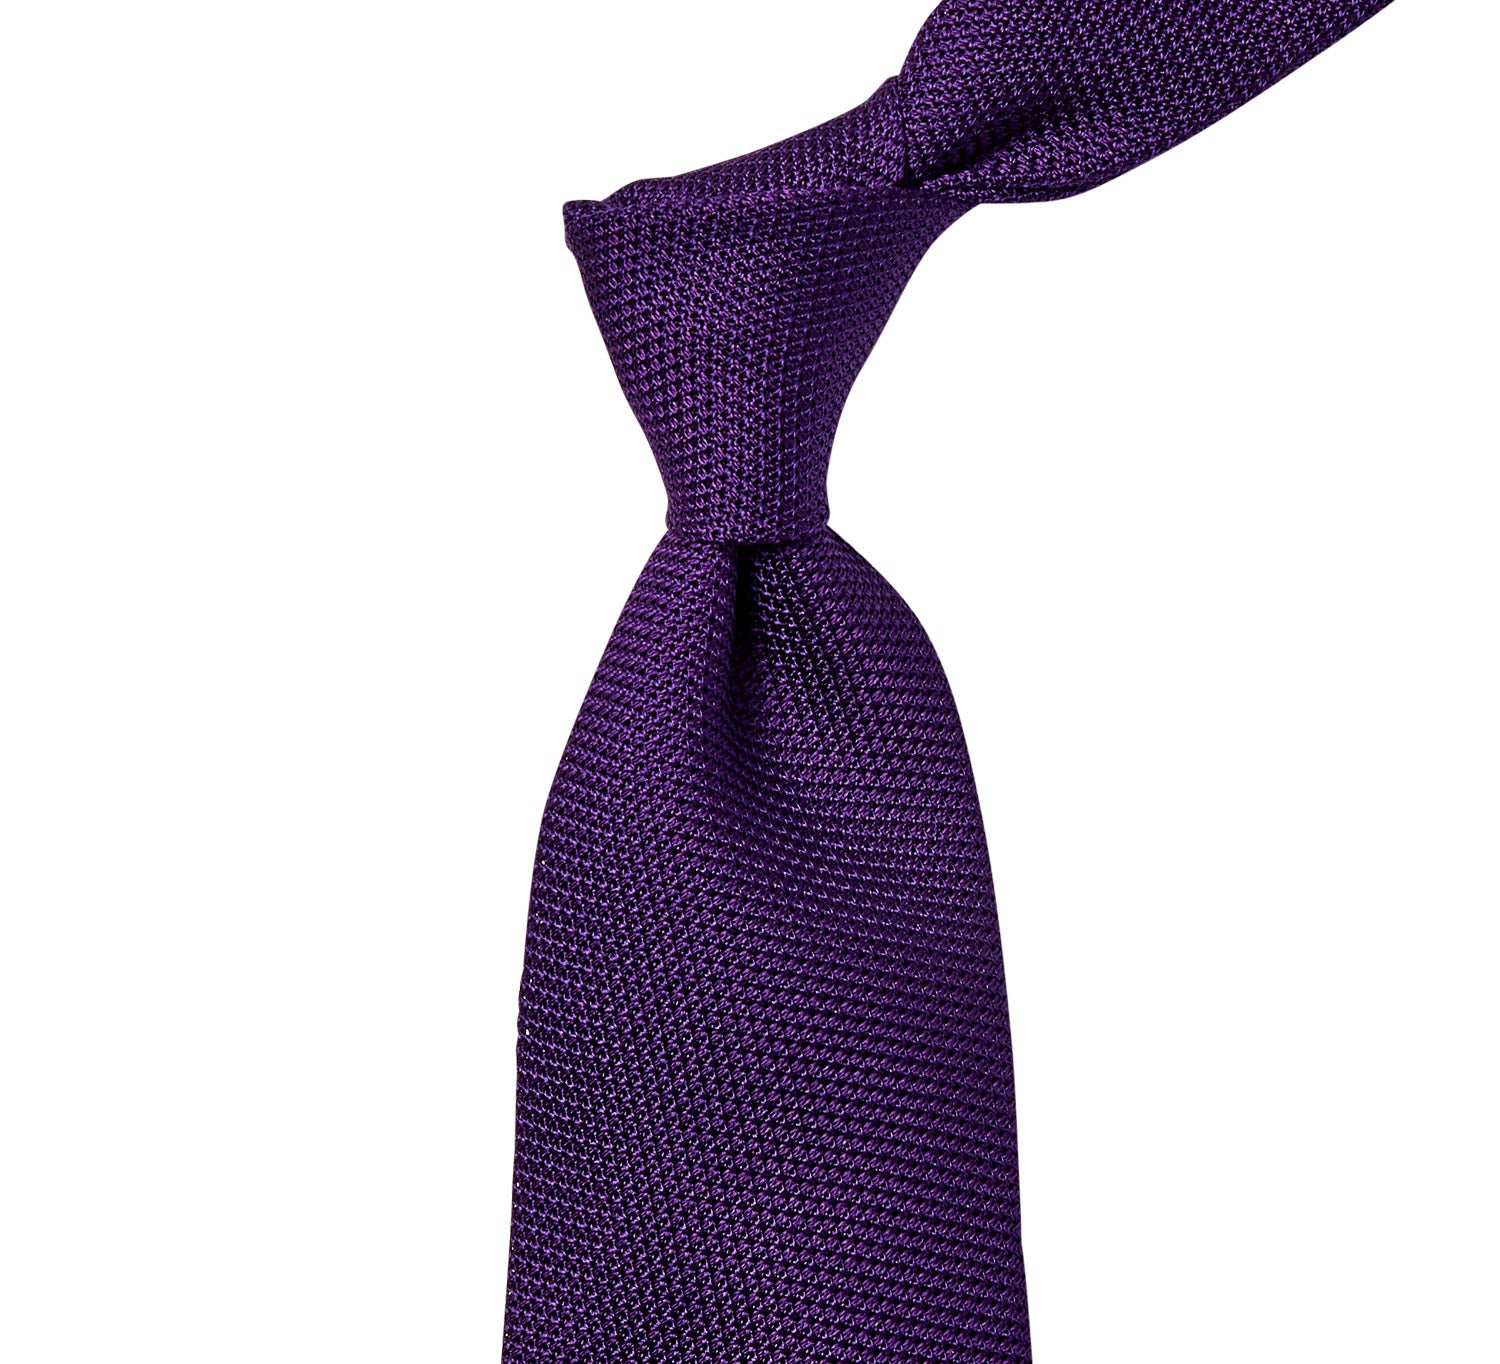 Sovereign Grade Grenadine Fina Purple Tie